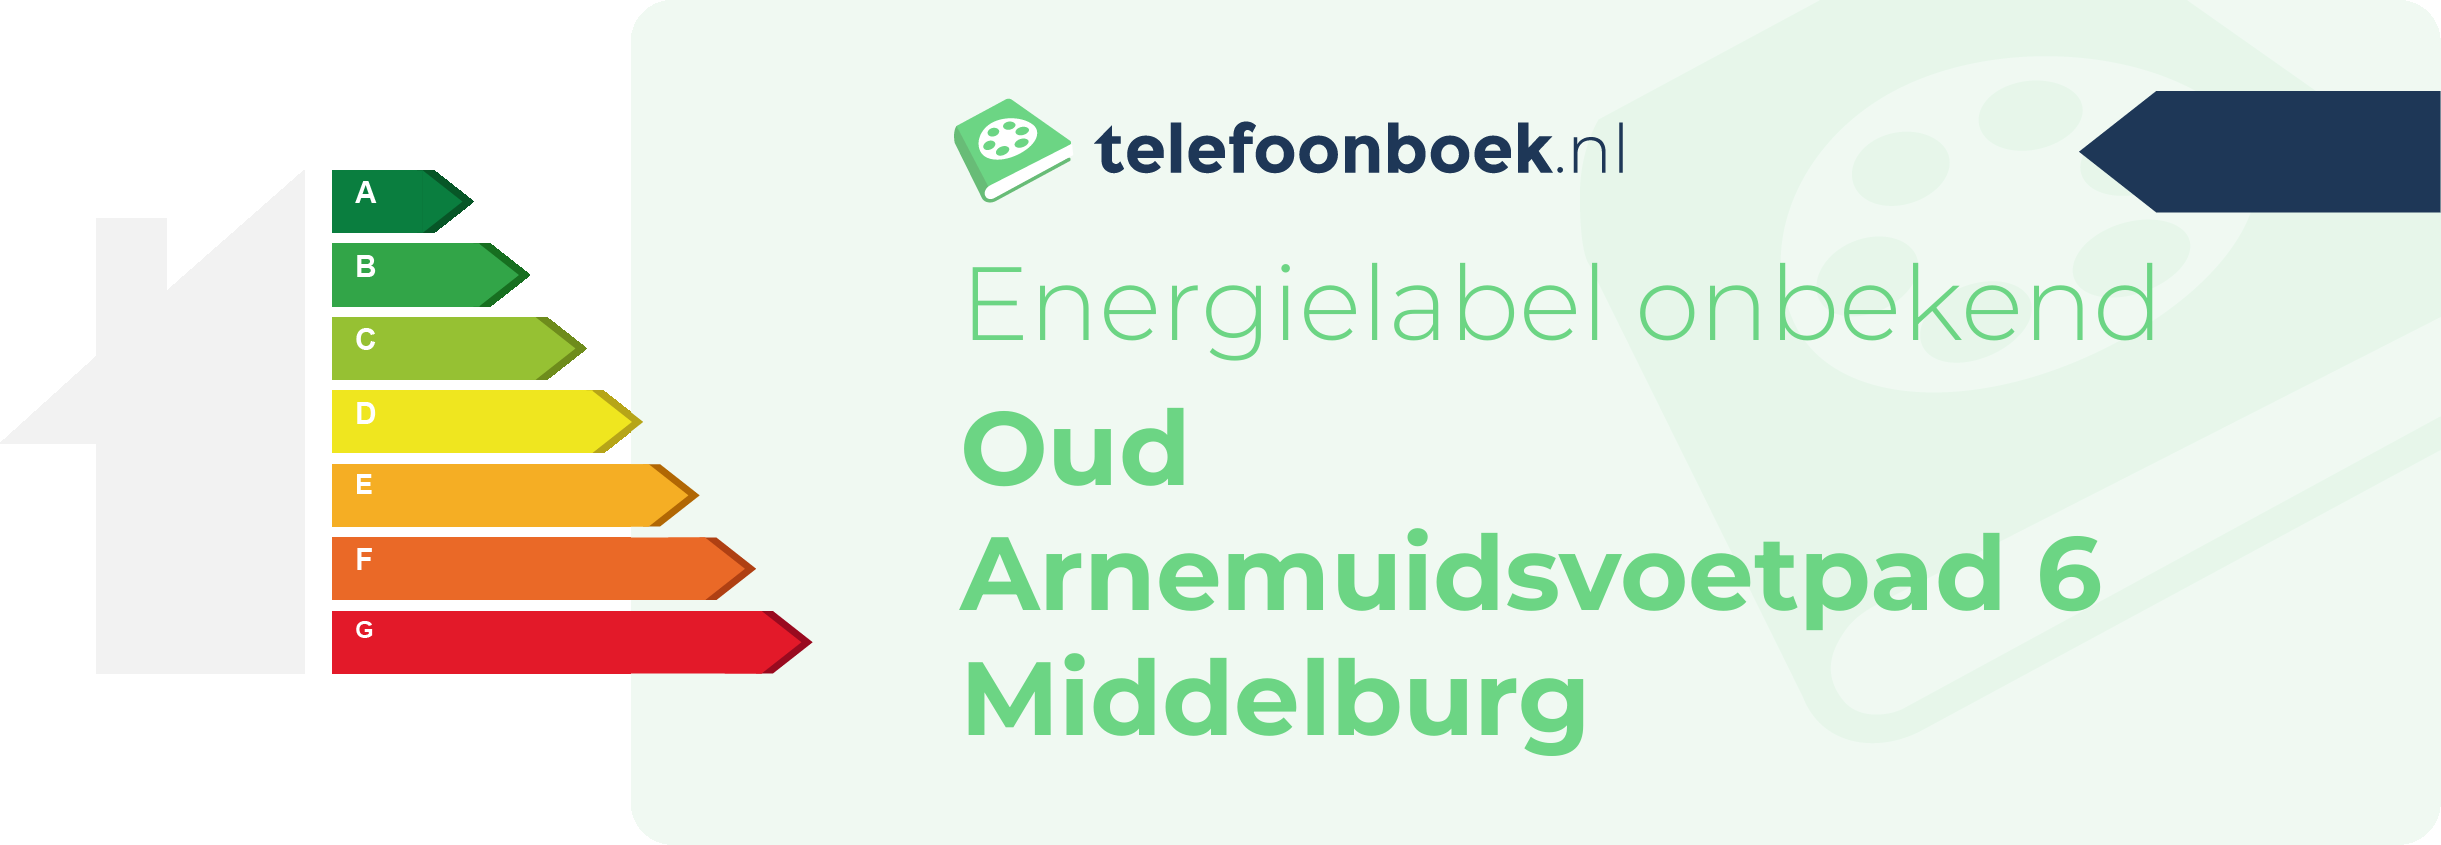 Energielabel Oud Arnemuidsvoetpad 6 Middelburg